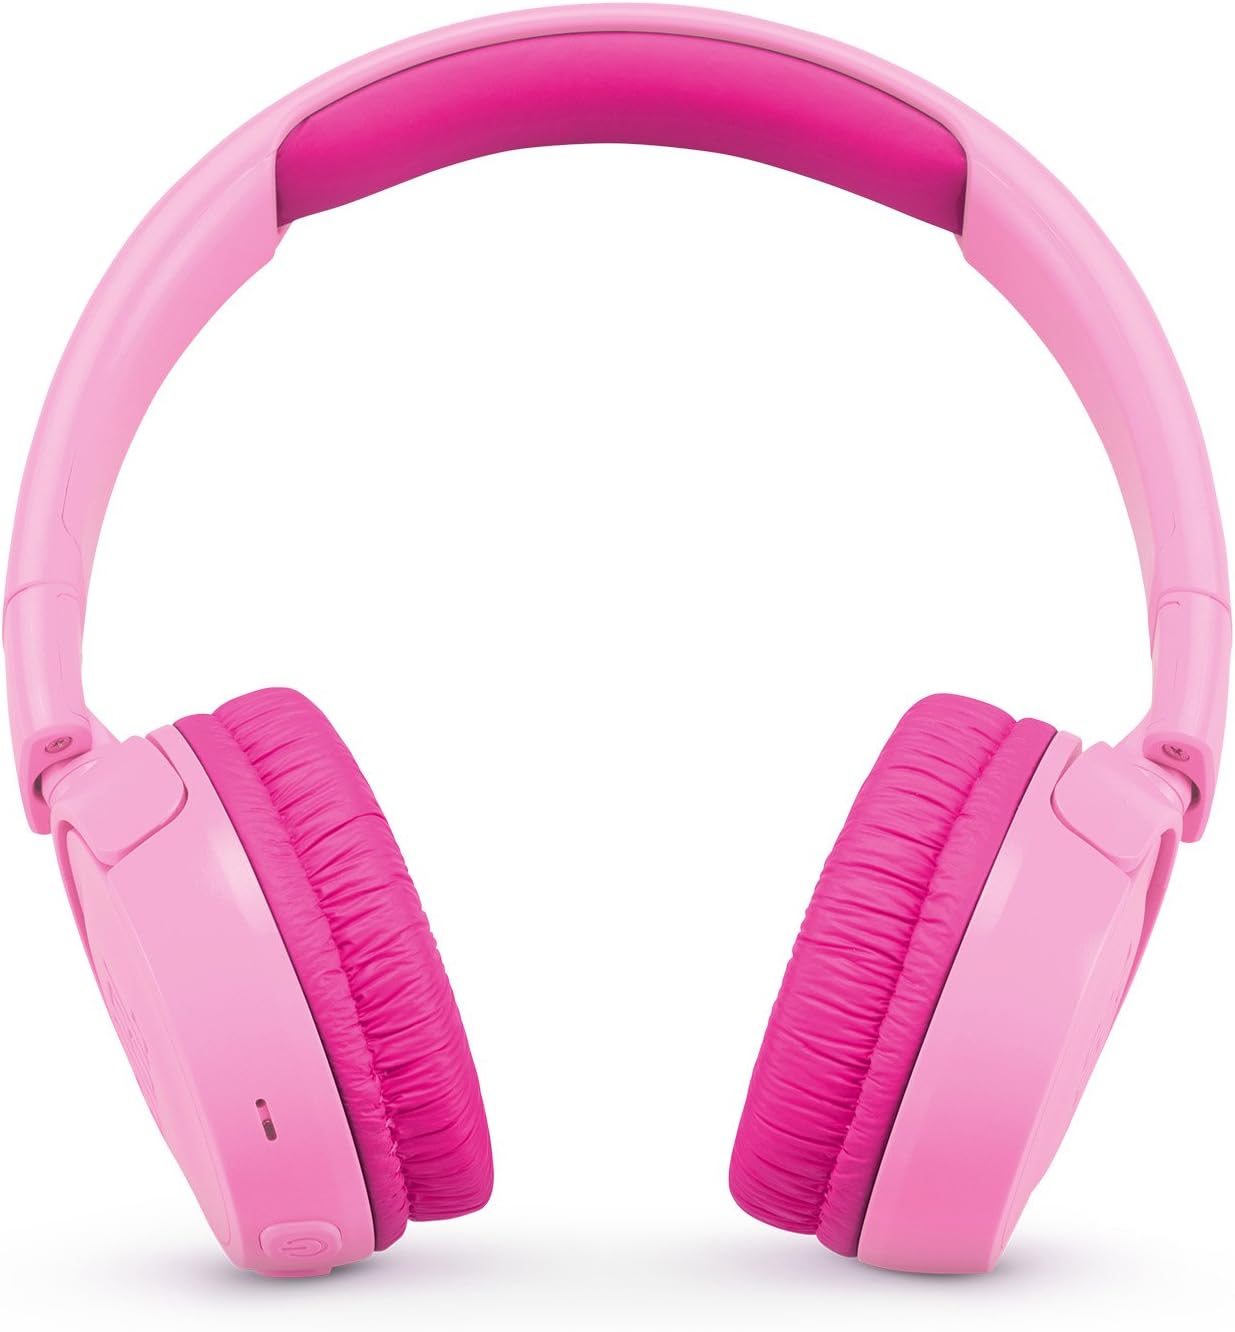 JBL JR 300BT Kids On-Ear Wireless Headphones with Safe Sound Technology - Pink (Certified Refurbished)